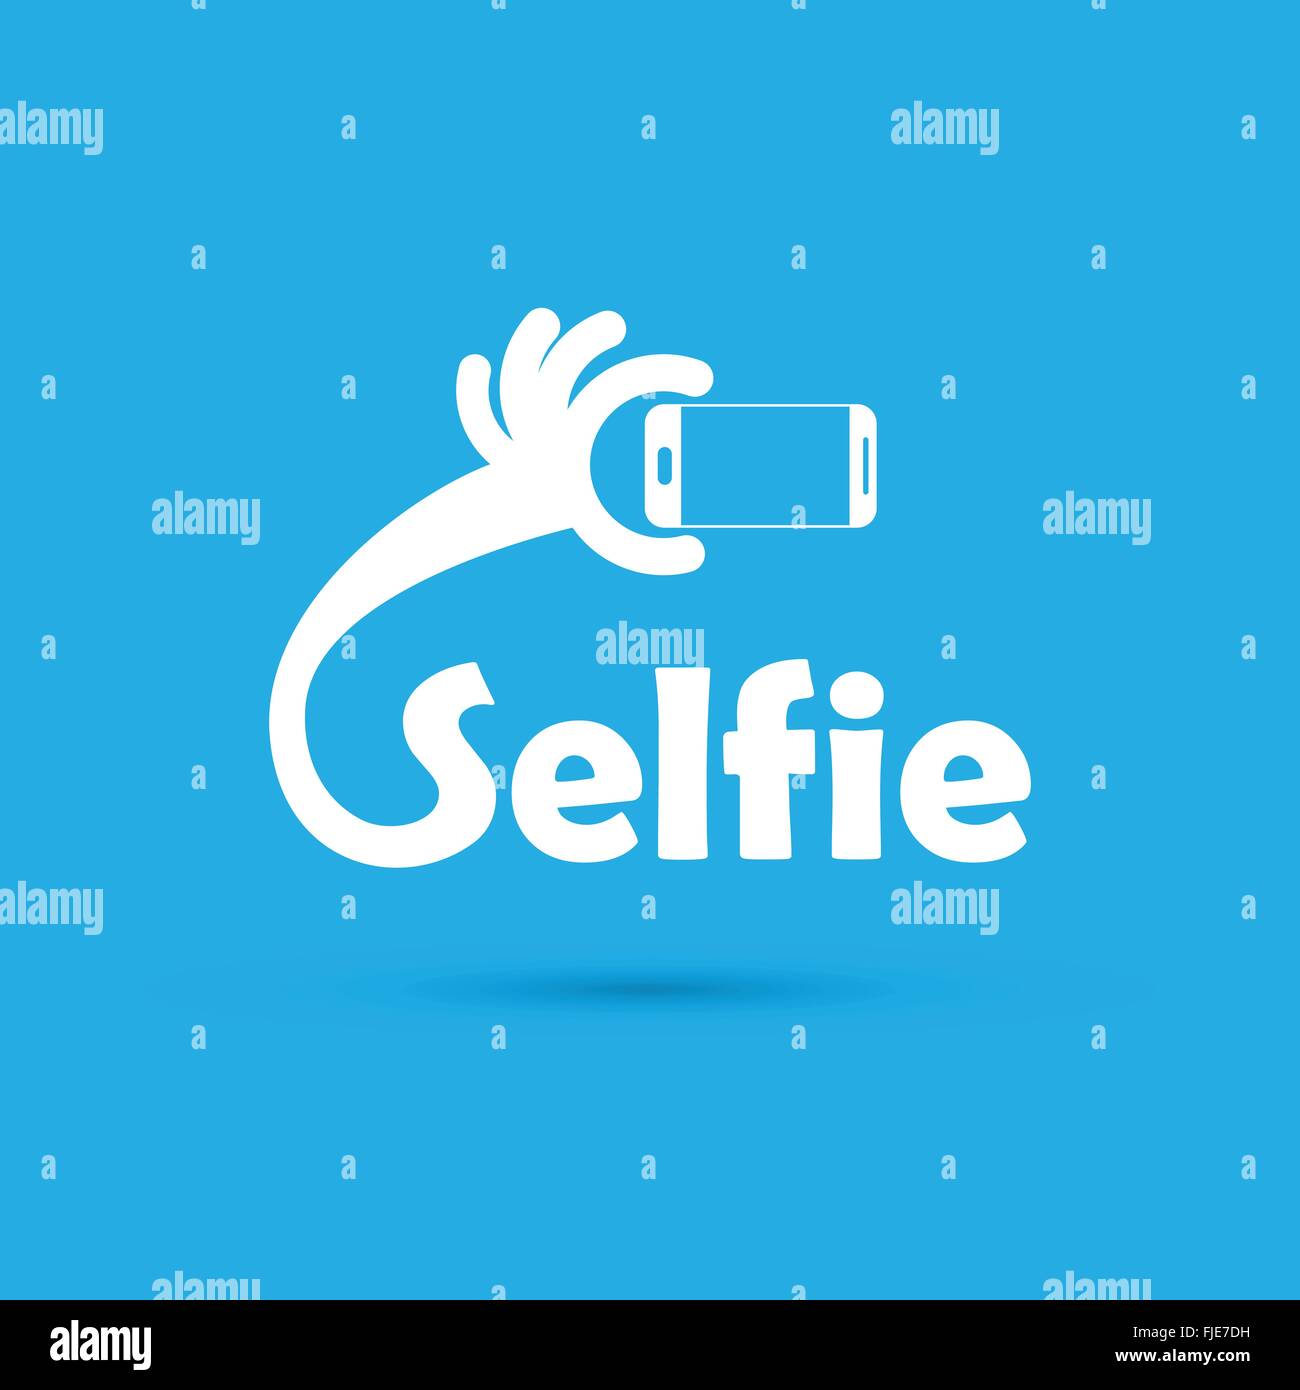 Taking selfie portrait photo on smart phone concept icon. Selfie concept design element. Vector illustration Stock Vector